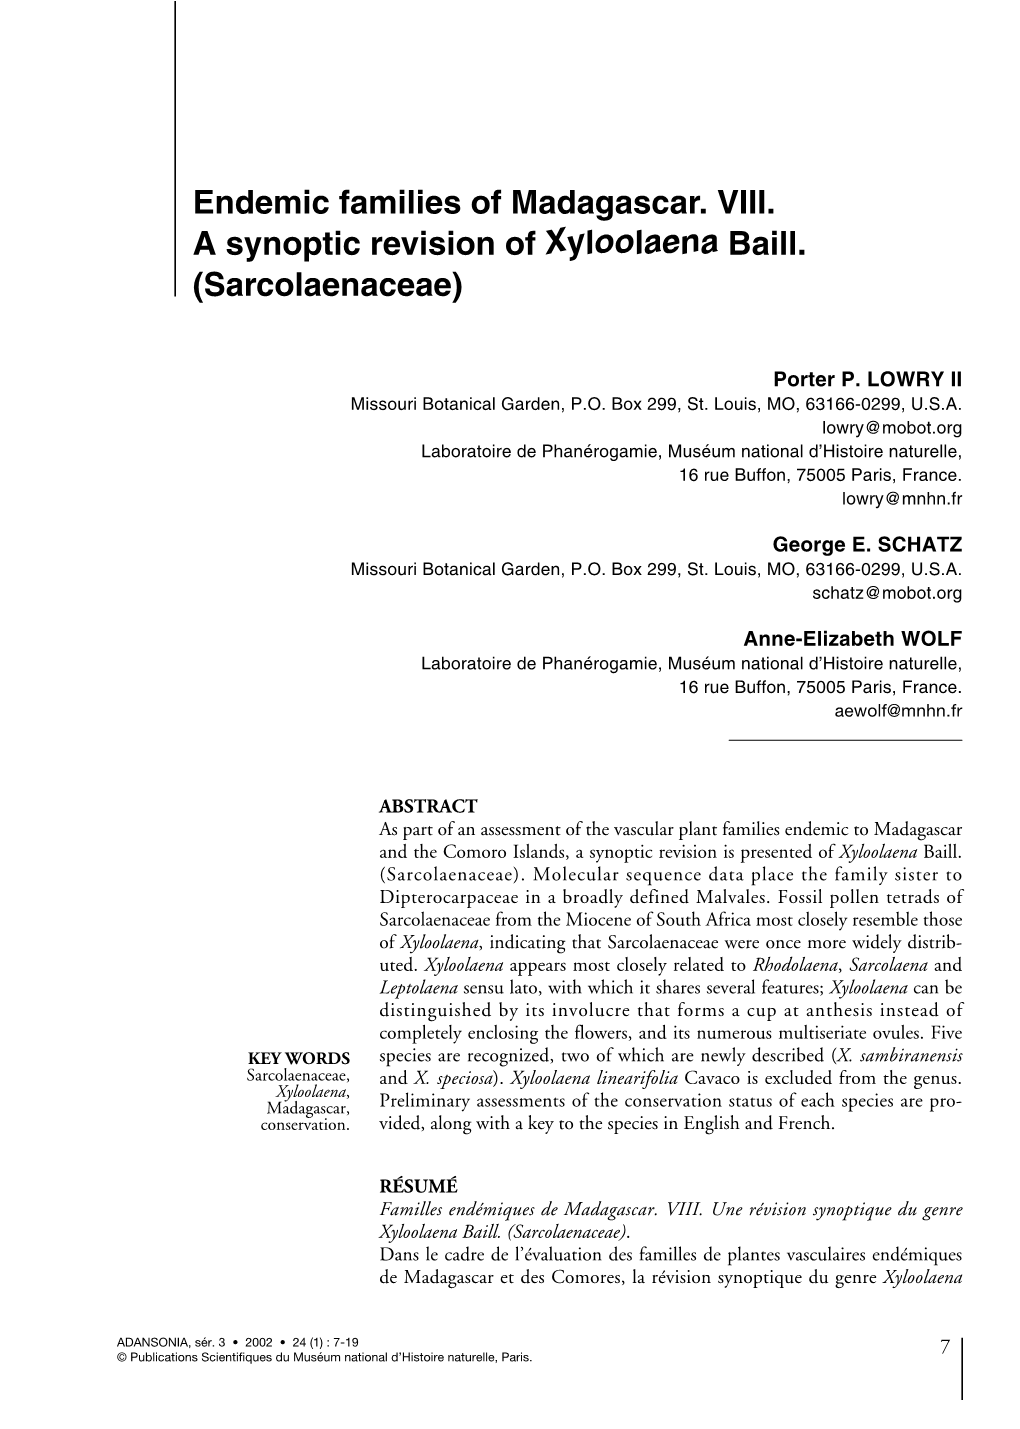 Endemic Families of Madagascar. VIII. a Synoptic Revision of Xyloolaena Baill